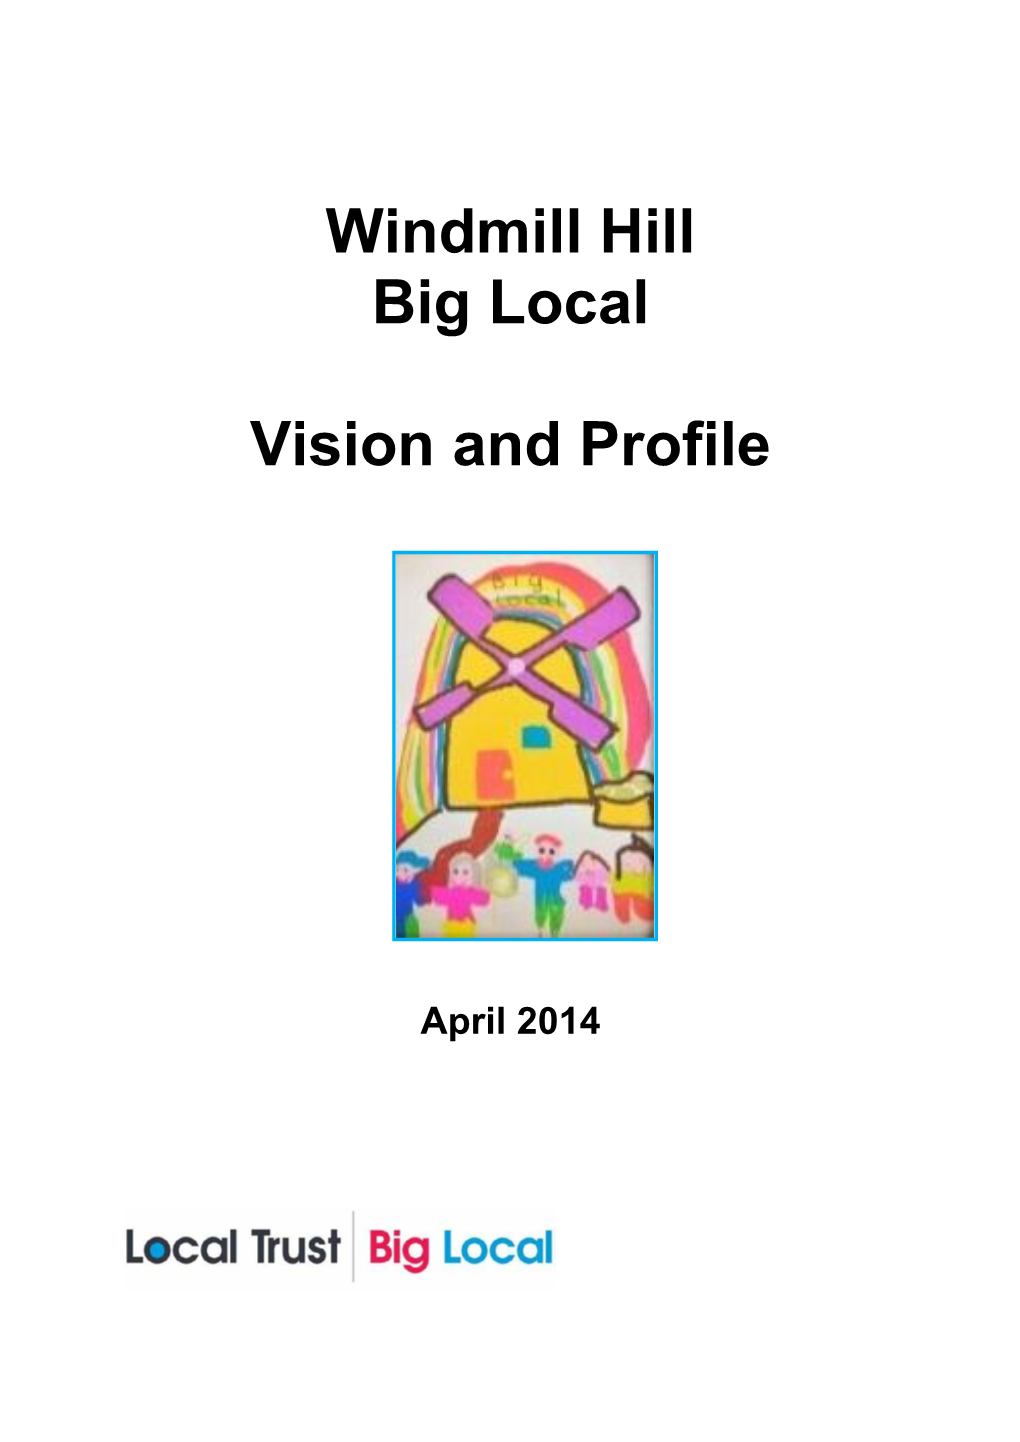 Windmill Hill Big Local Vision and Profile